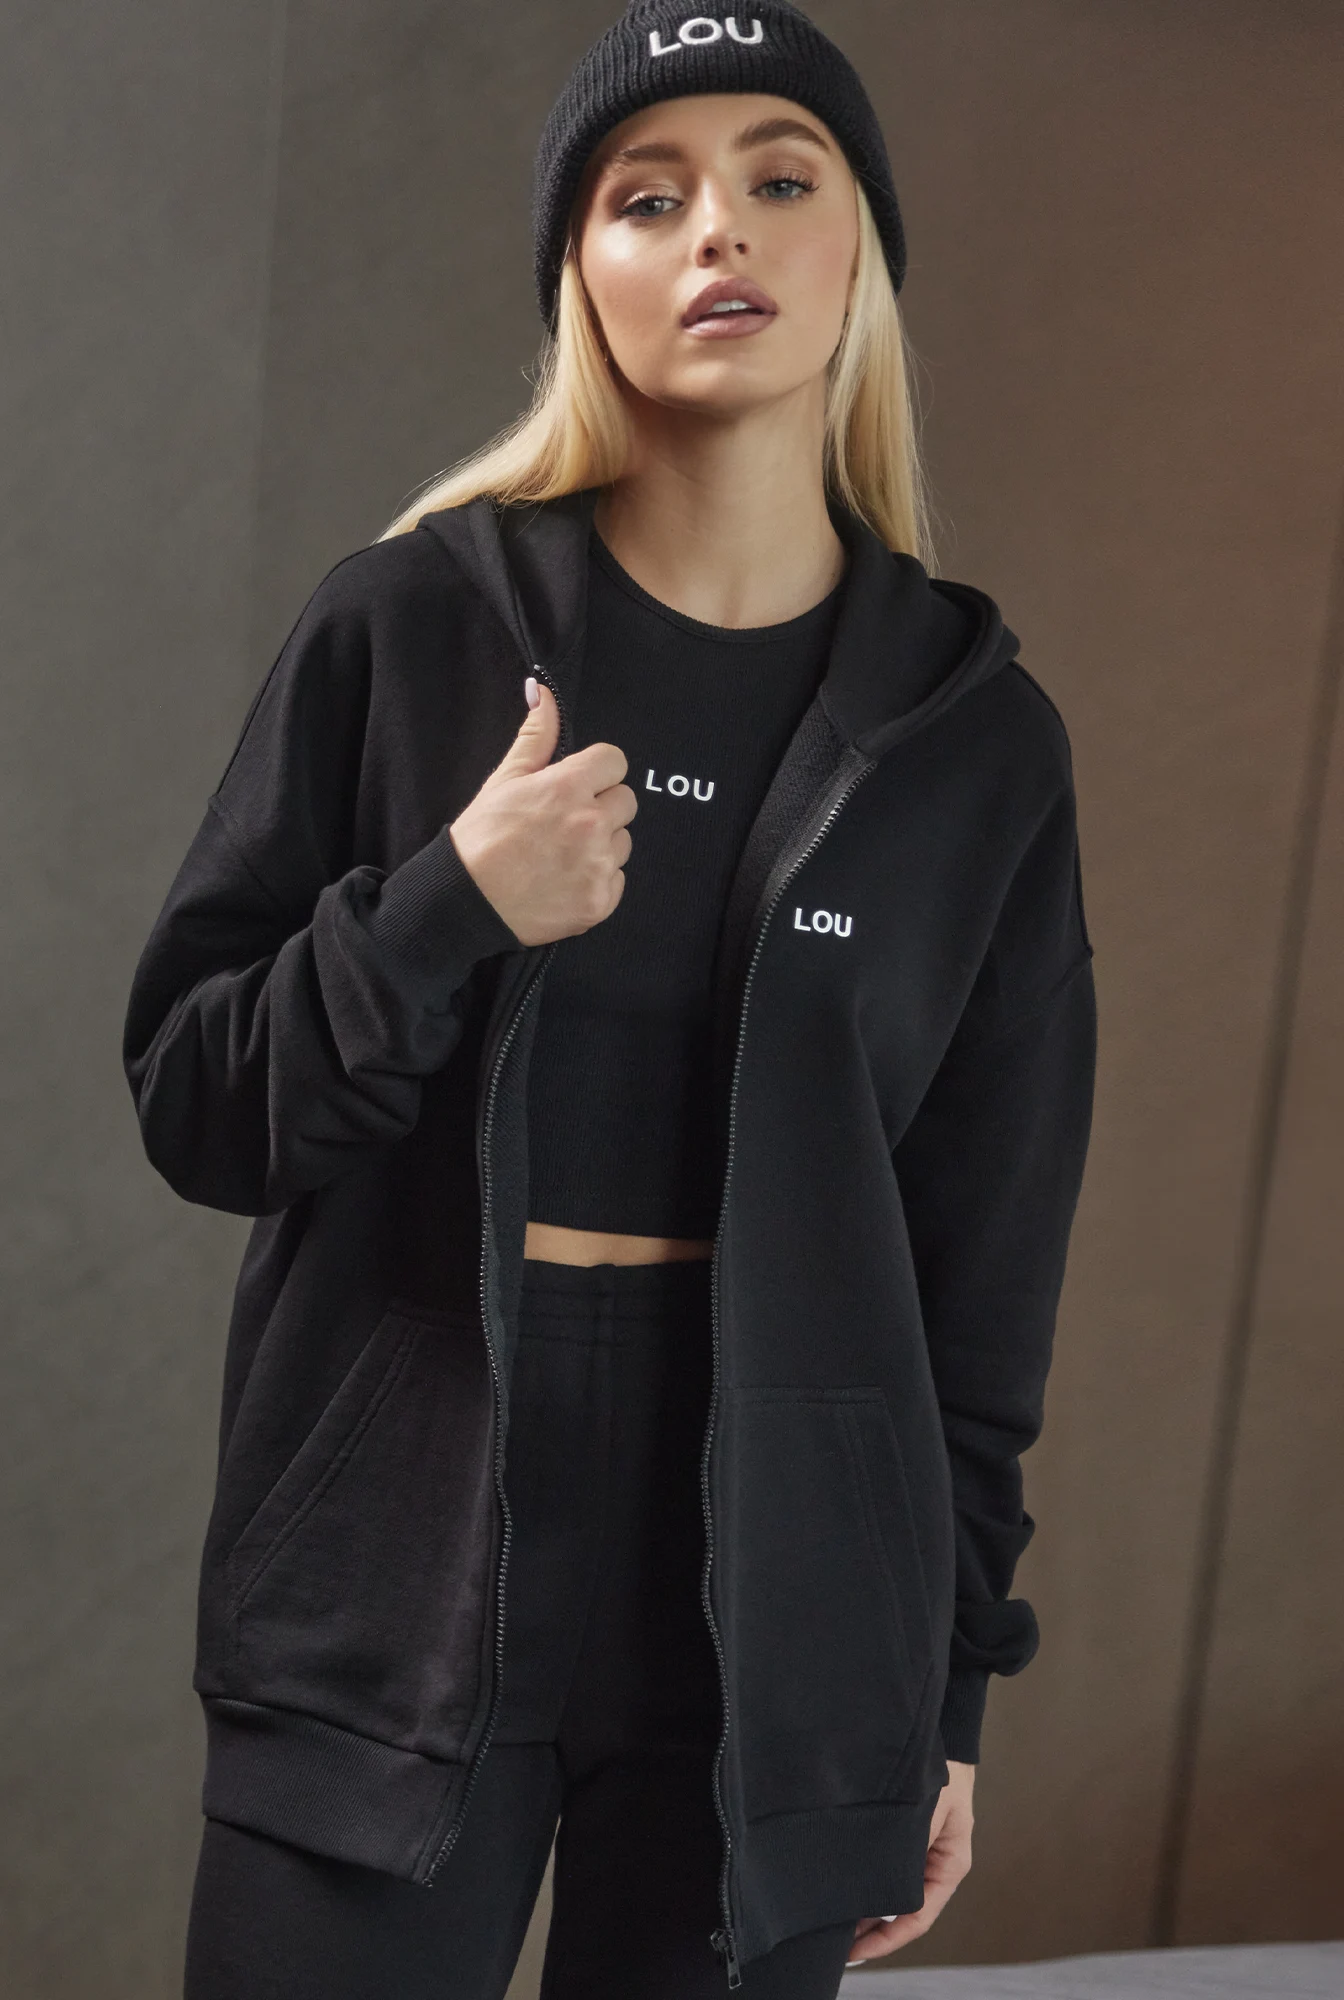 Saura Black Unzipped - comfortable sweatshirt in black with zipper